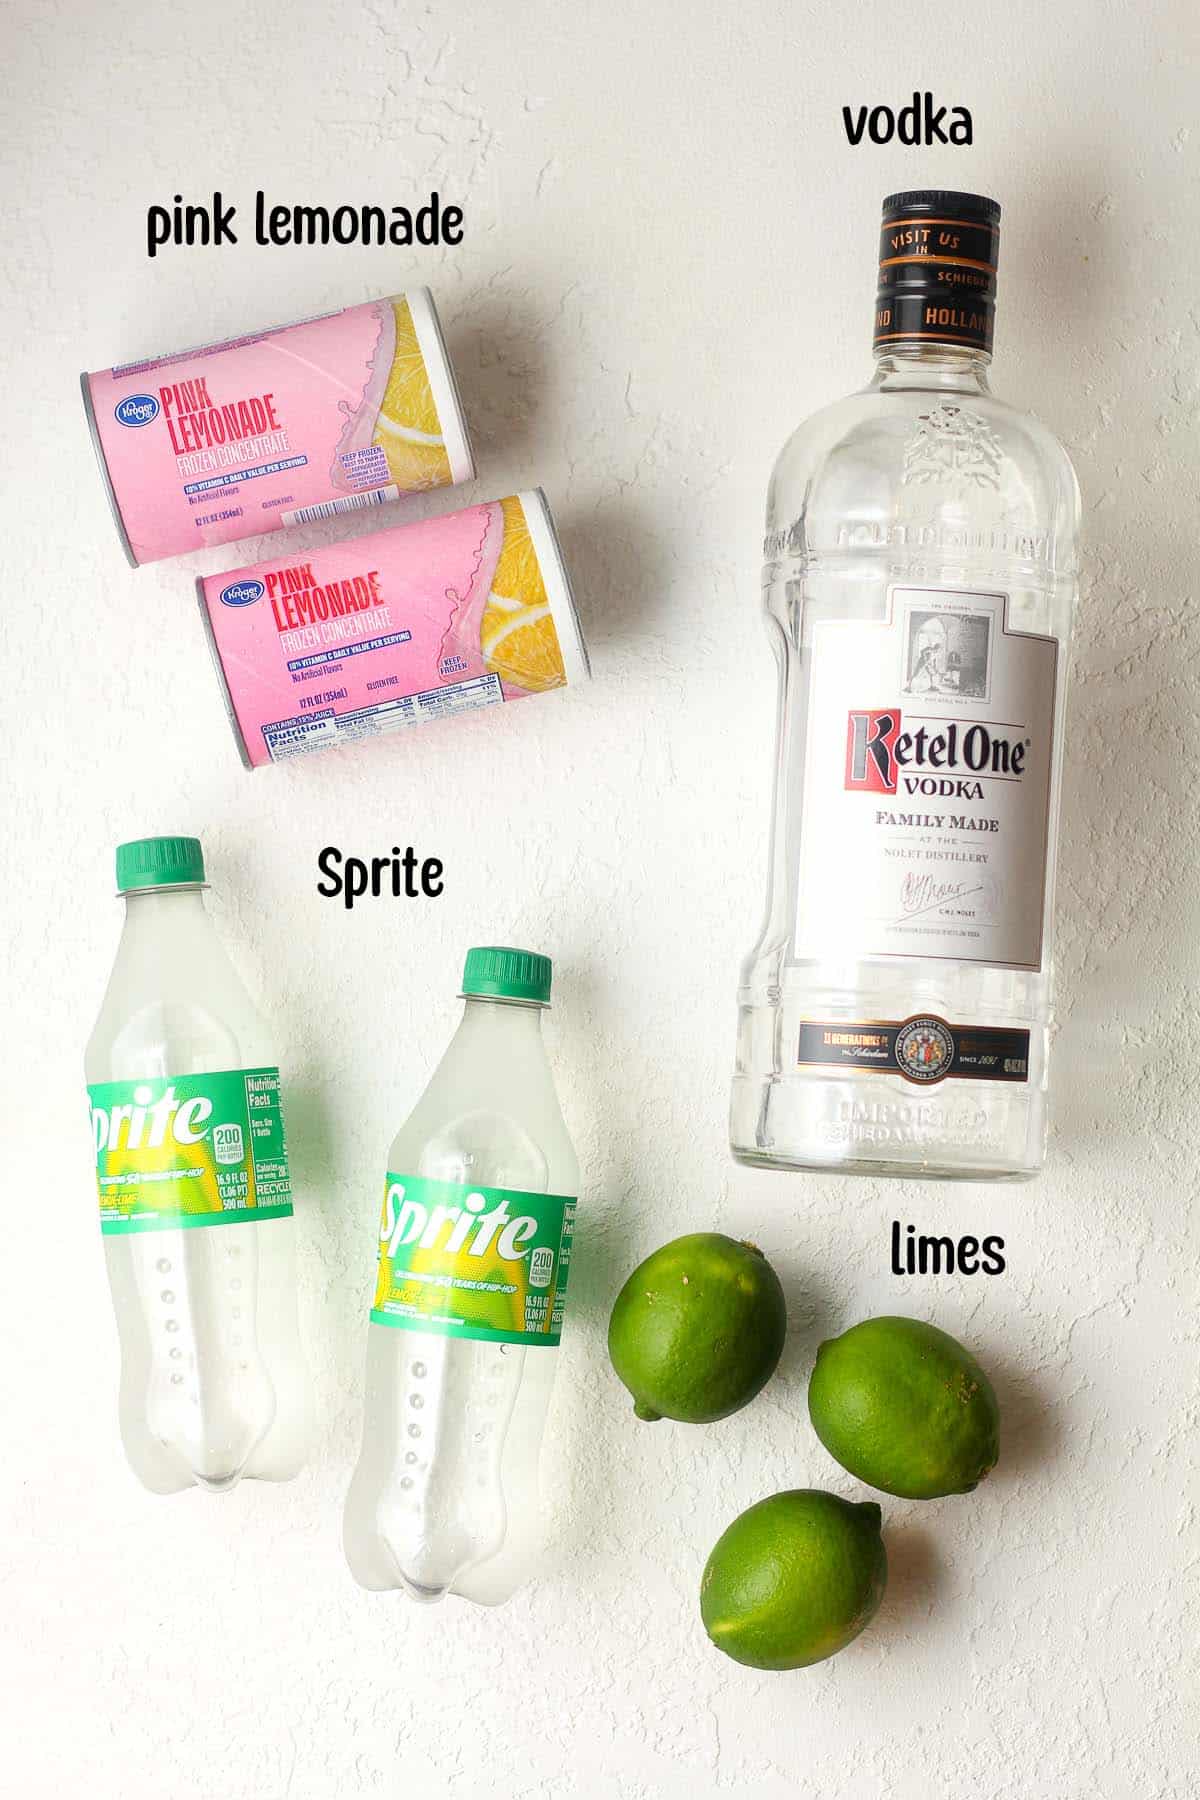 The ingredients for the pink lemonade vodka slush.